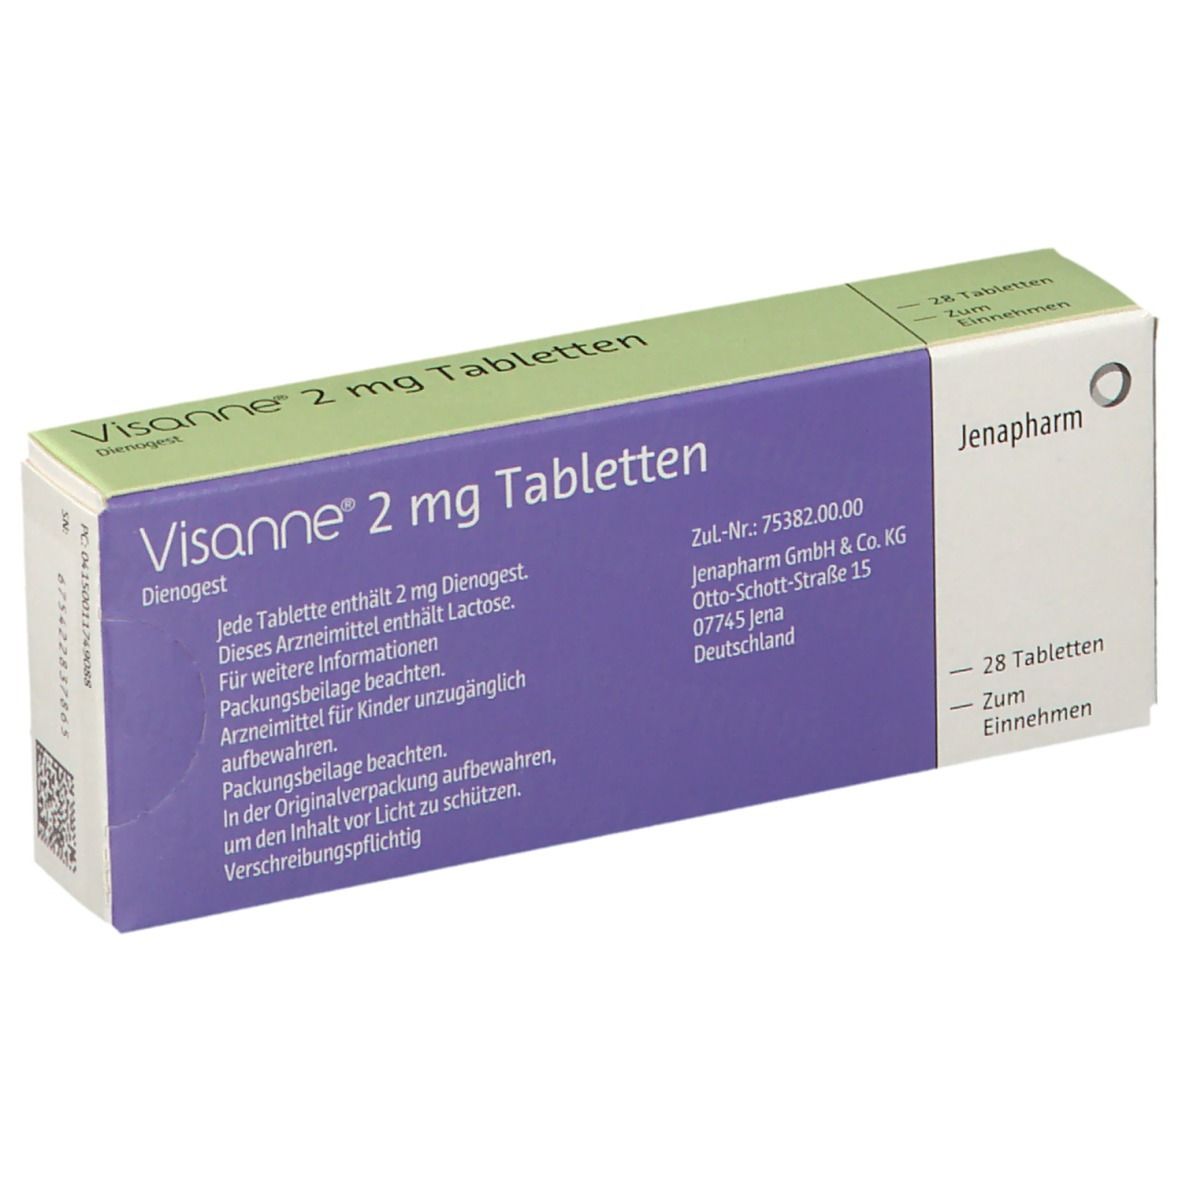 Visanne® 2 mg